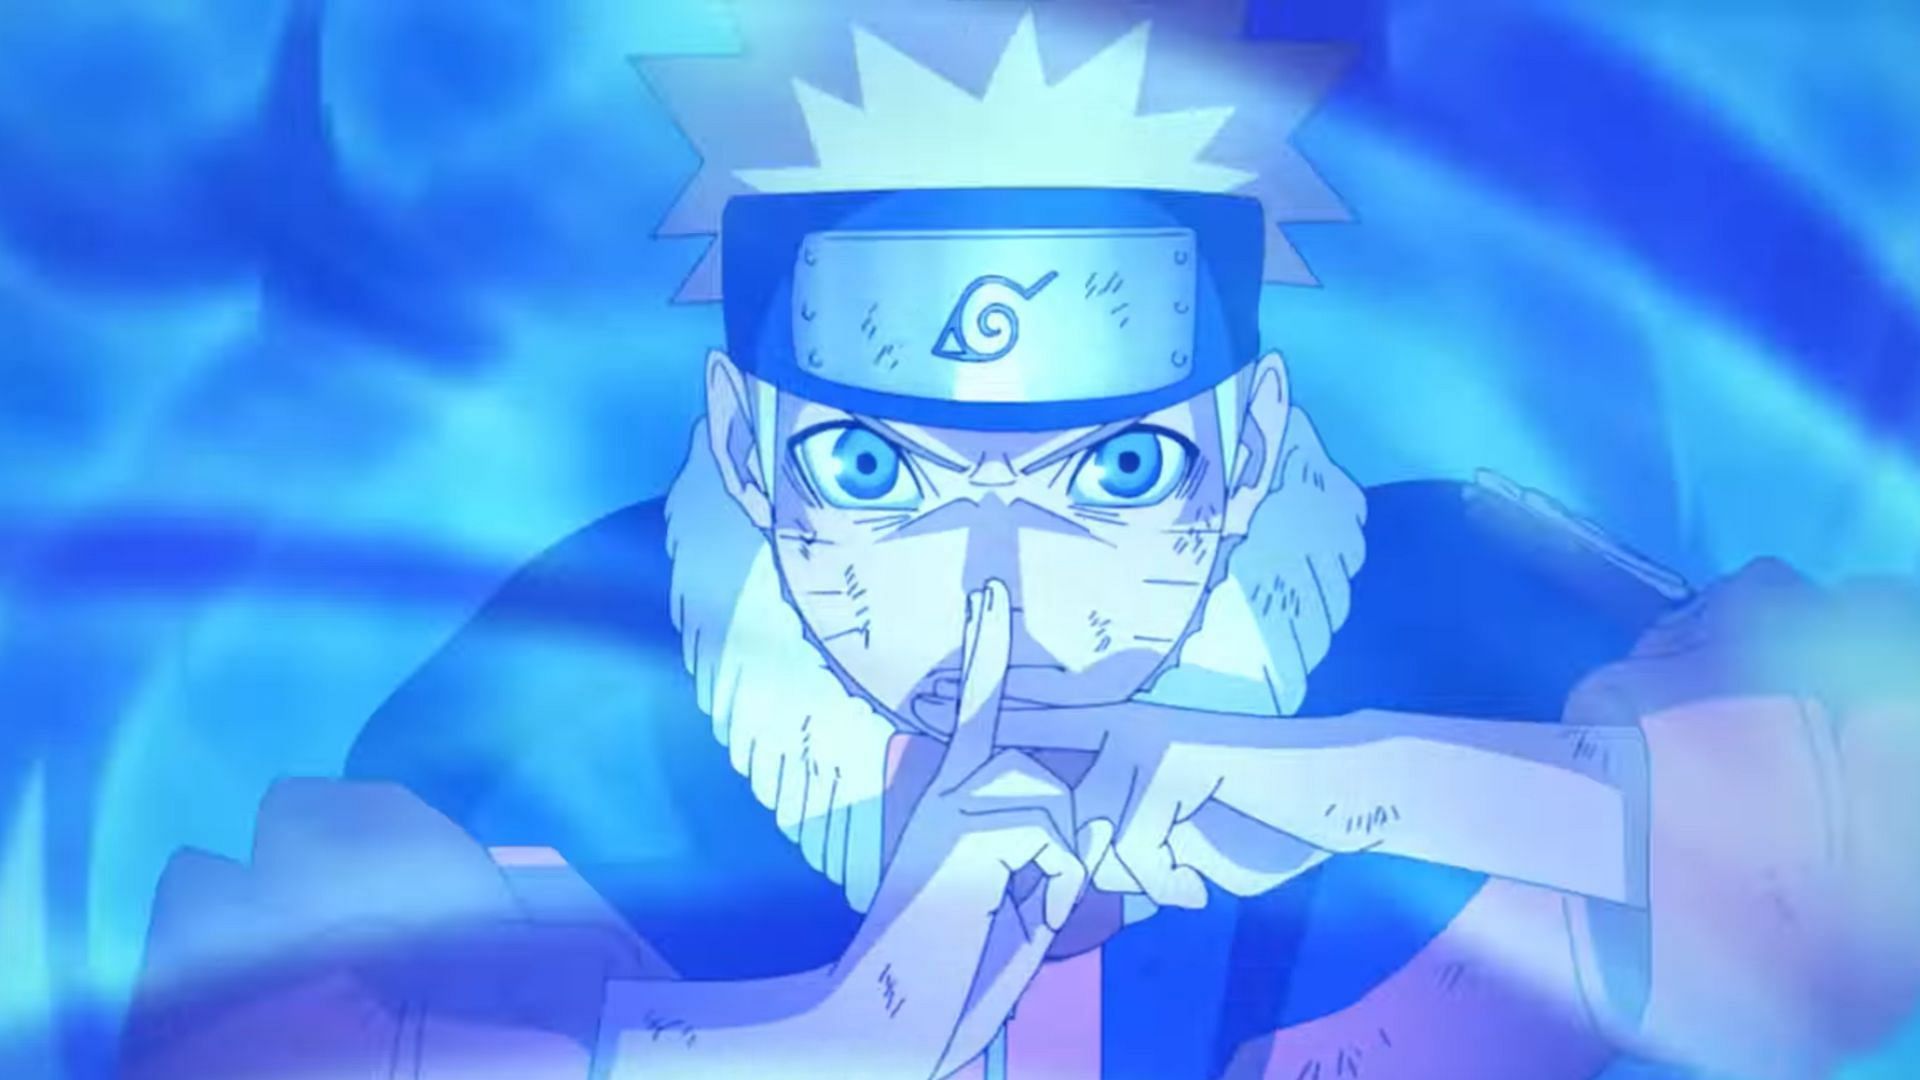 Naruto - Latest News, Updates on Naruto Manga & Anime Series